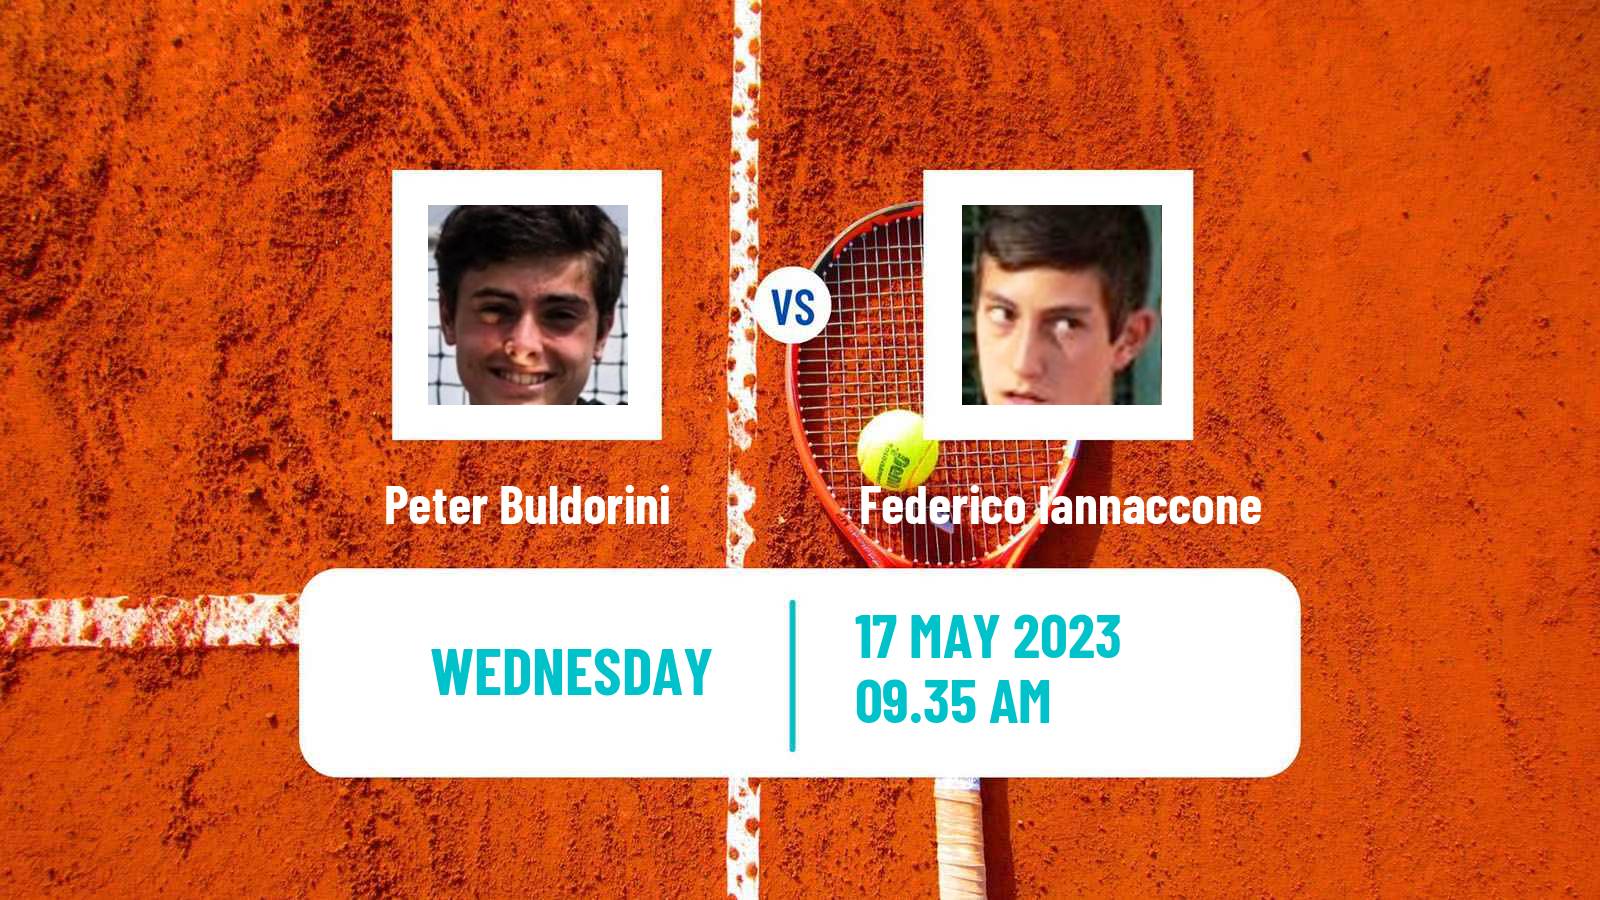 Tennis ITF M25 Reggio Emilia Men Peter Buldorini - Federico Iannaccone